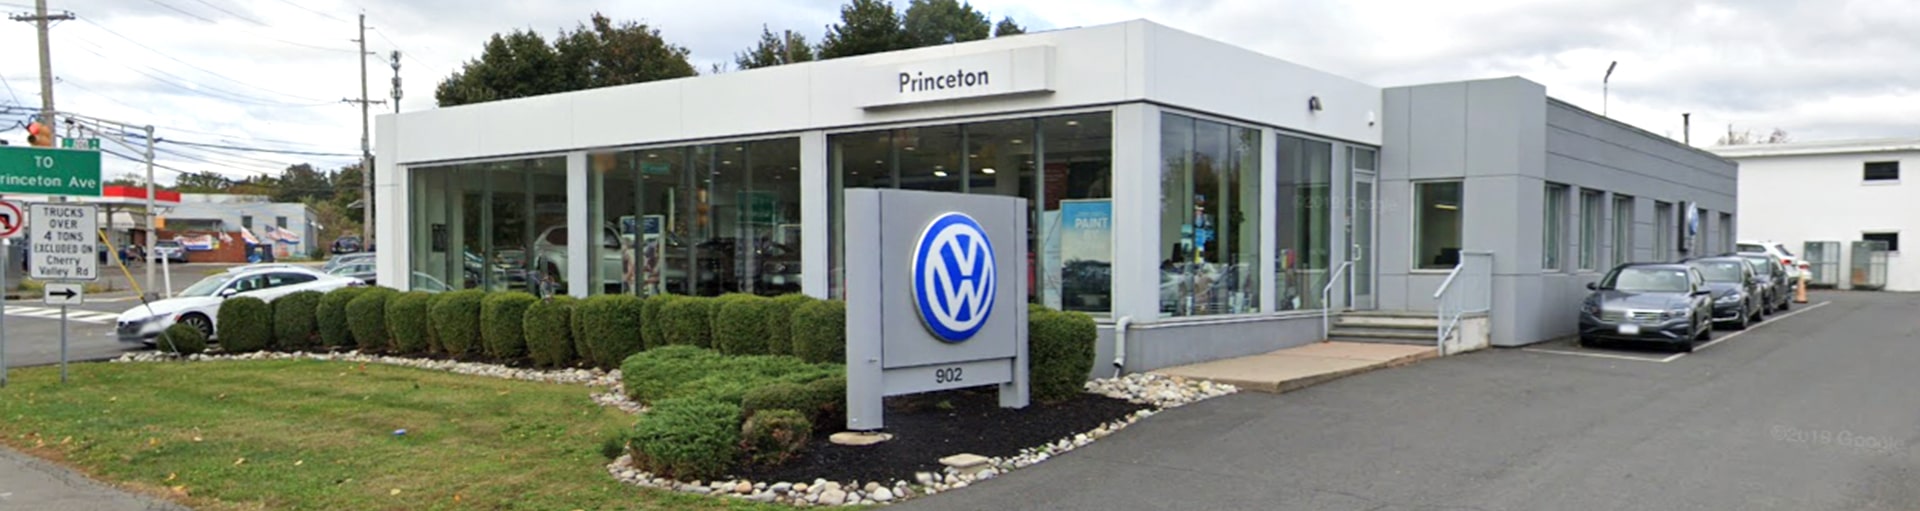 Volkswagen Princeton Multi-Point Inspection Service